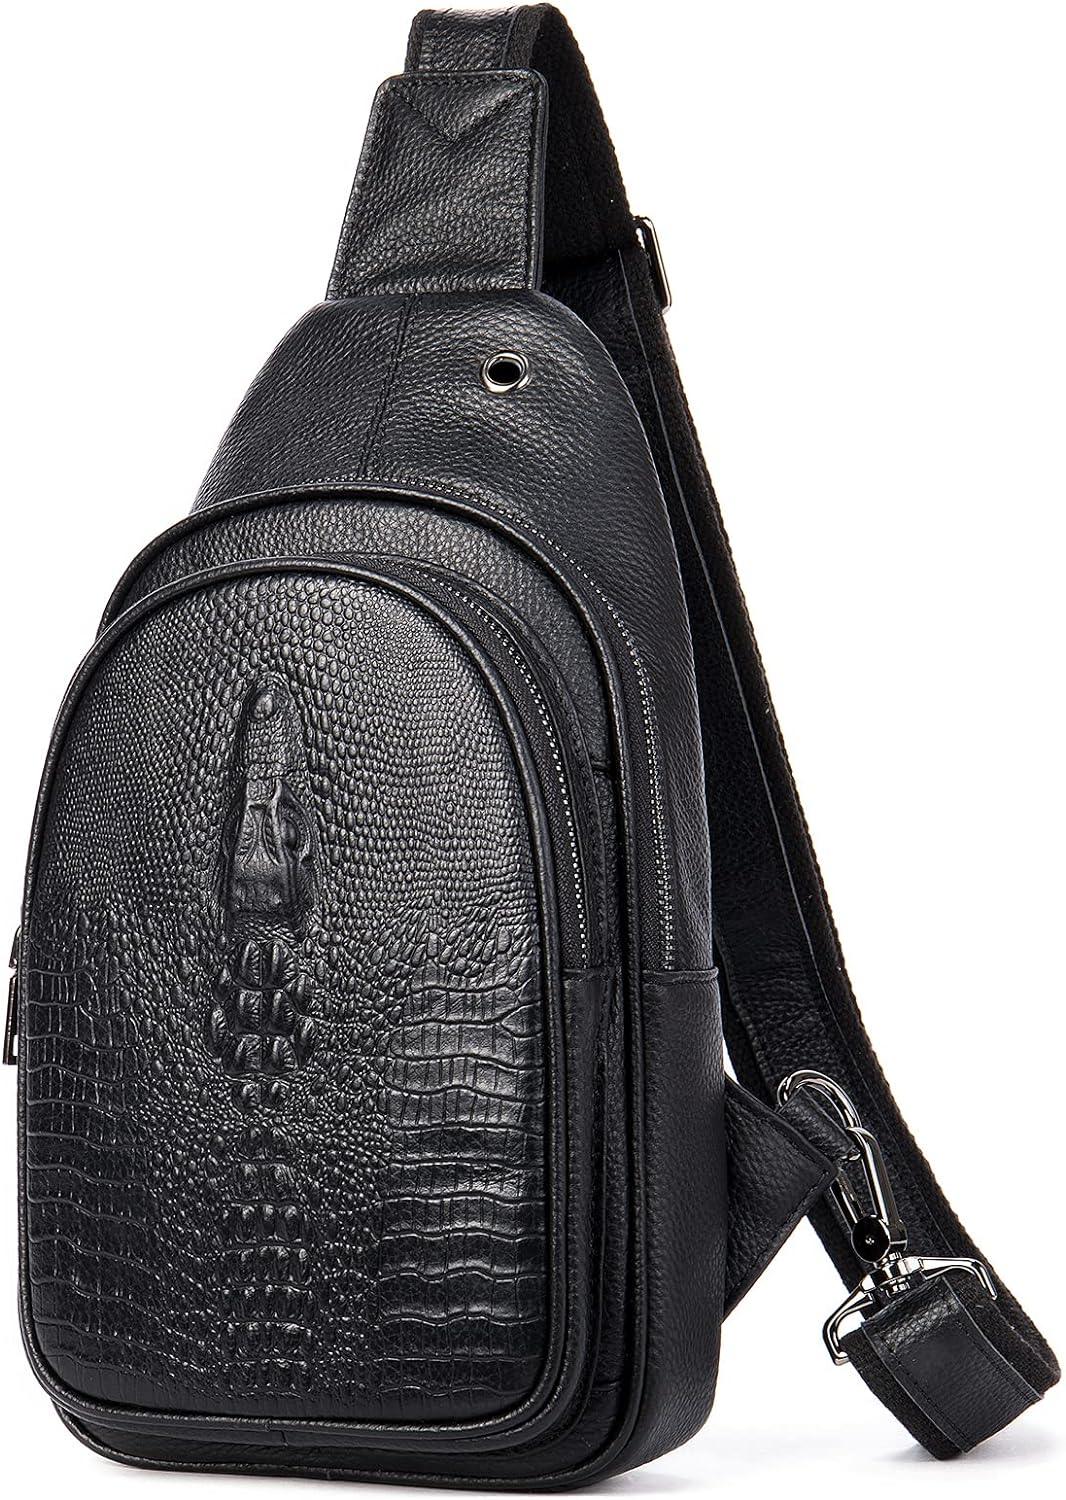 FR Fashion Co. 12" Men's Crocodile Leather Sling Bag - FR Fashion Co. 